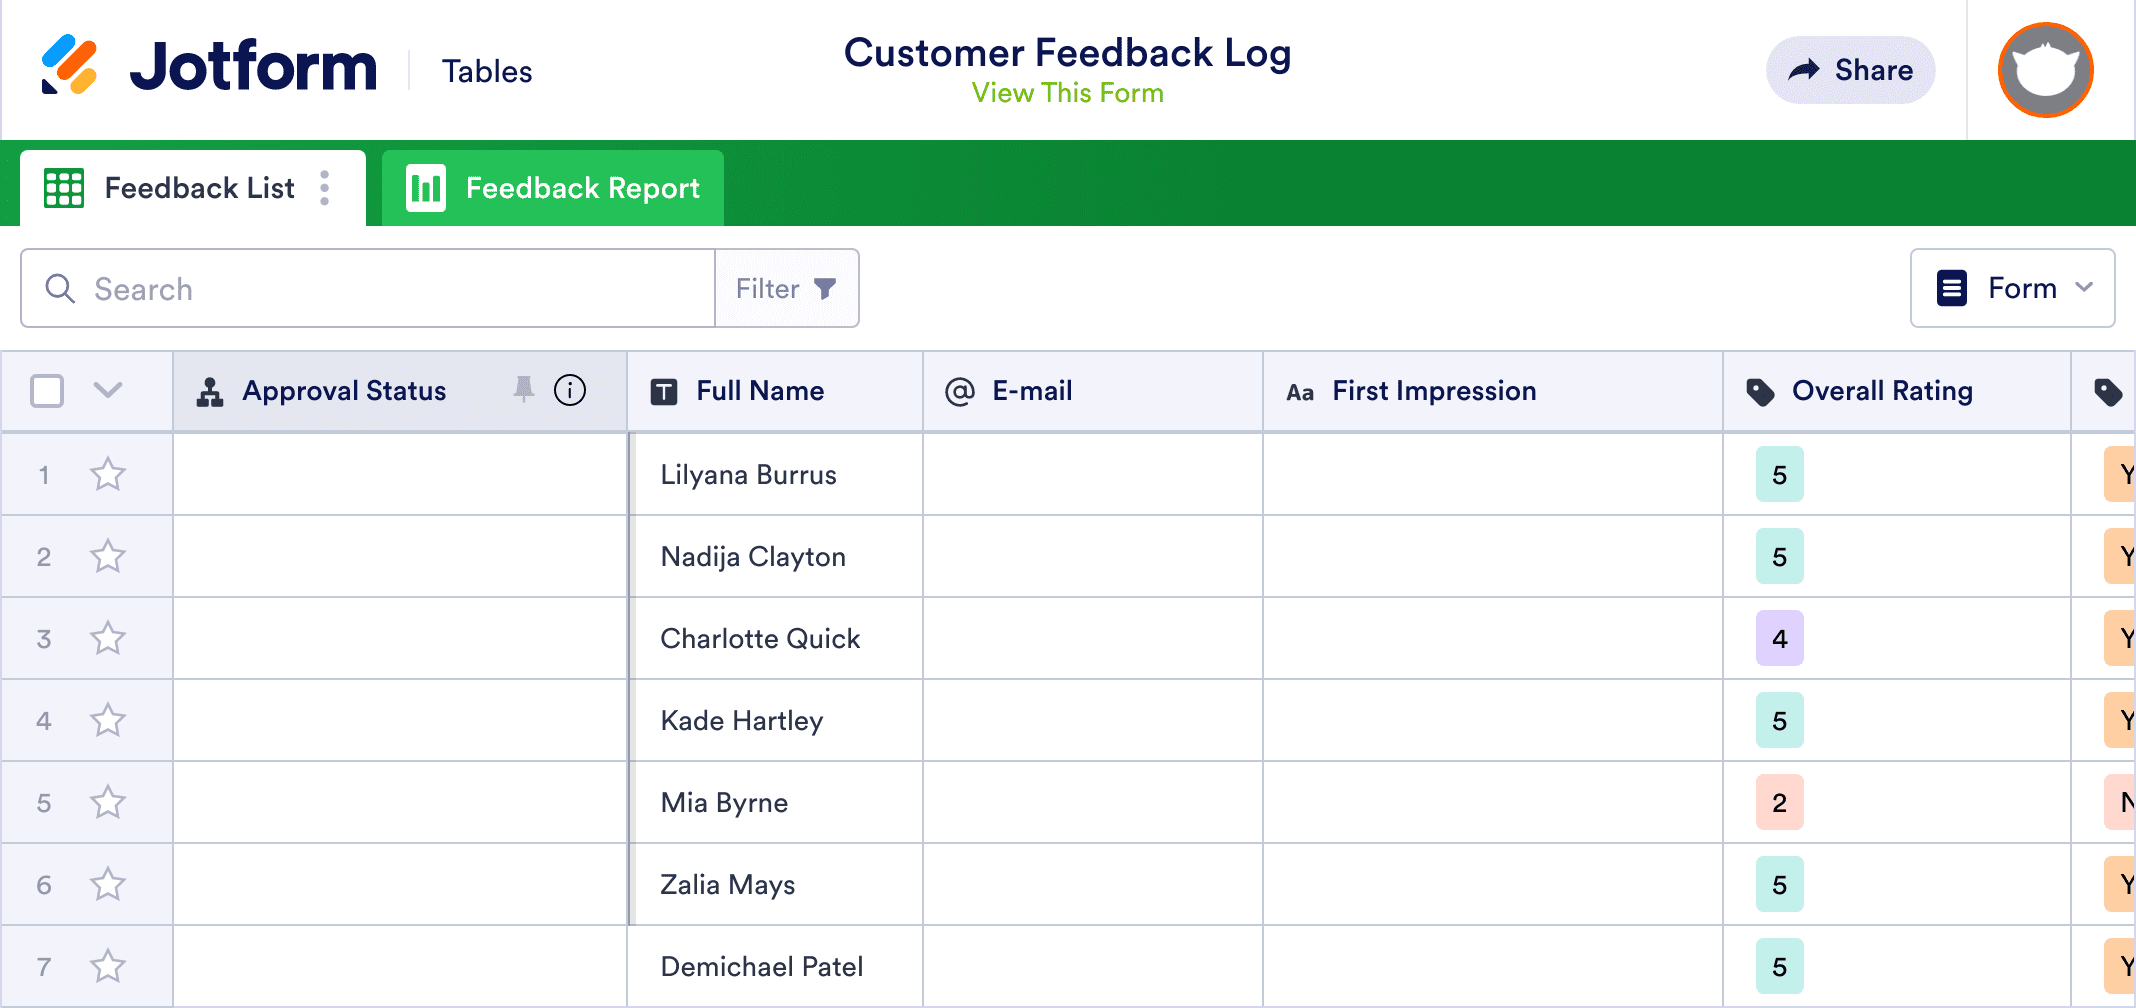 Customer Feedback Log Template | Jotform Tables